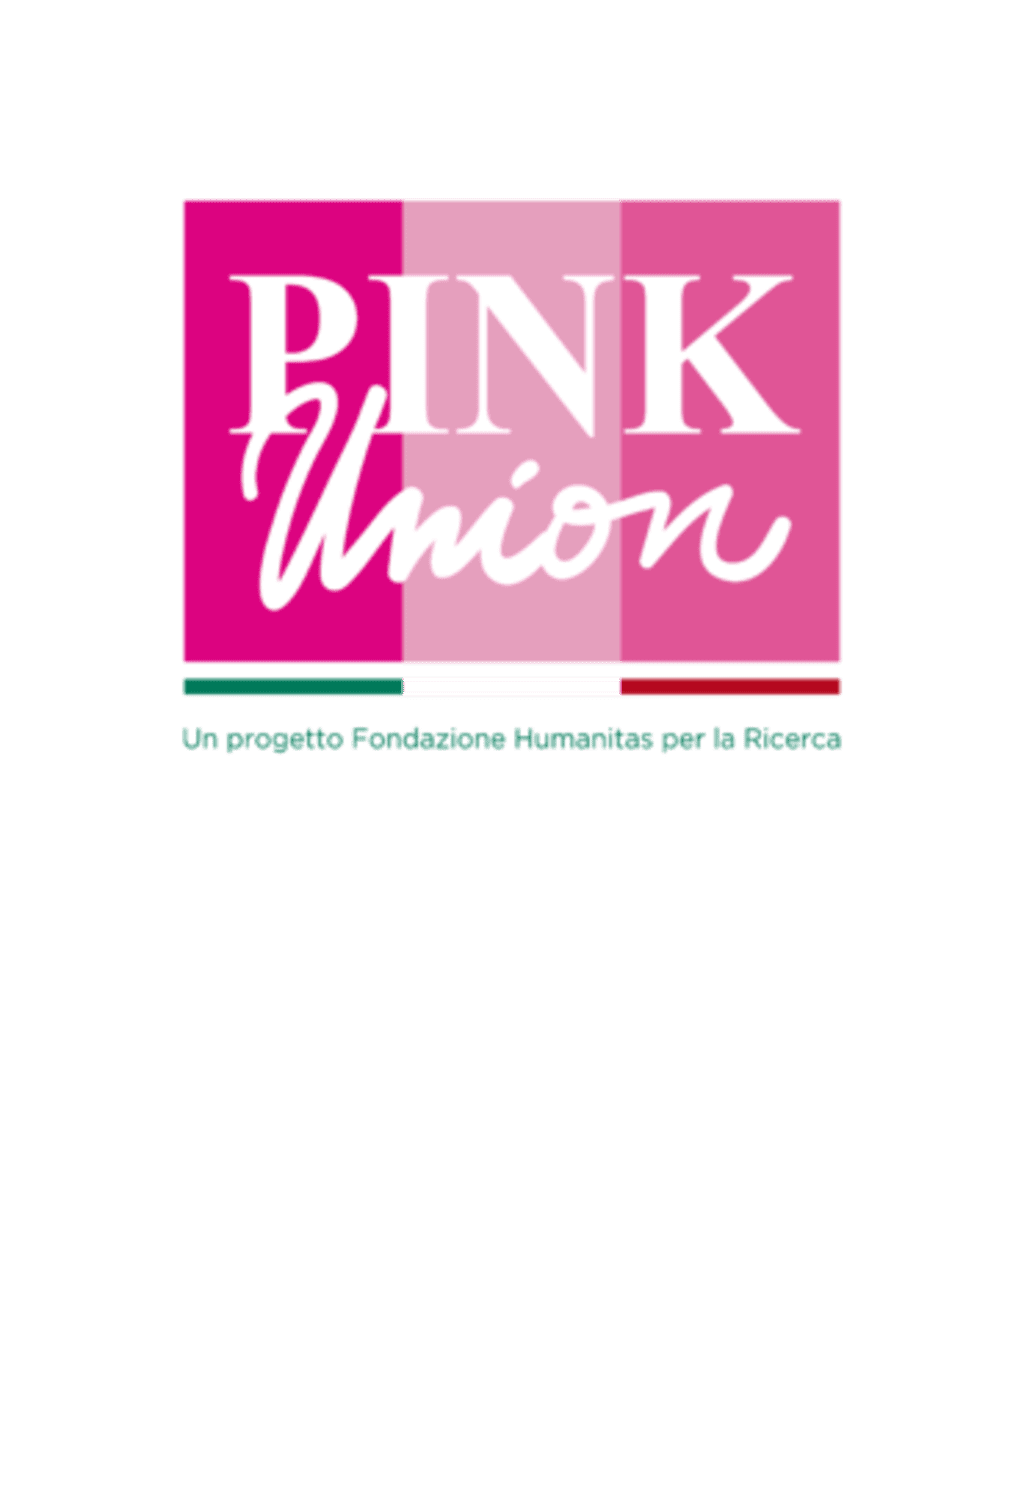 Pink union